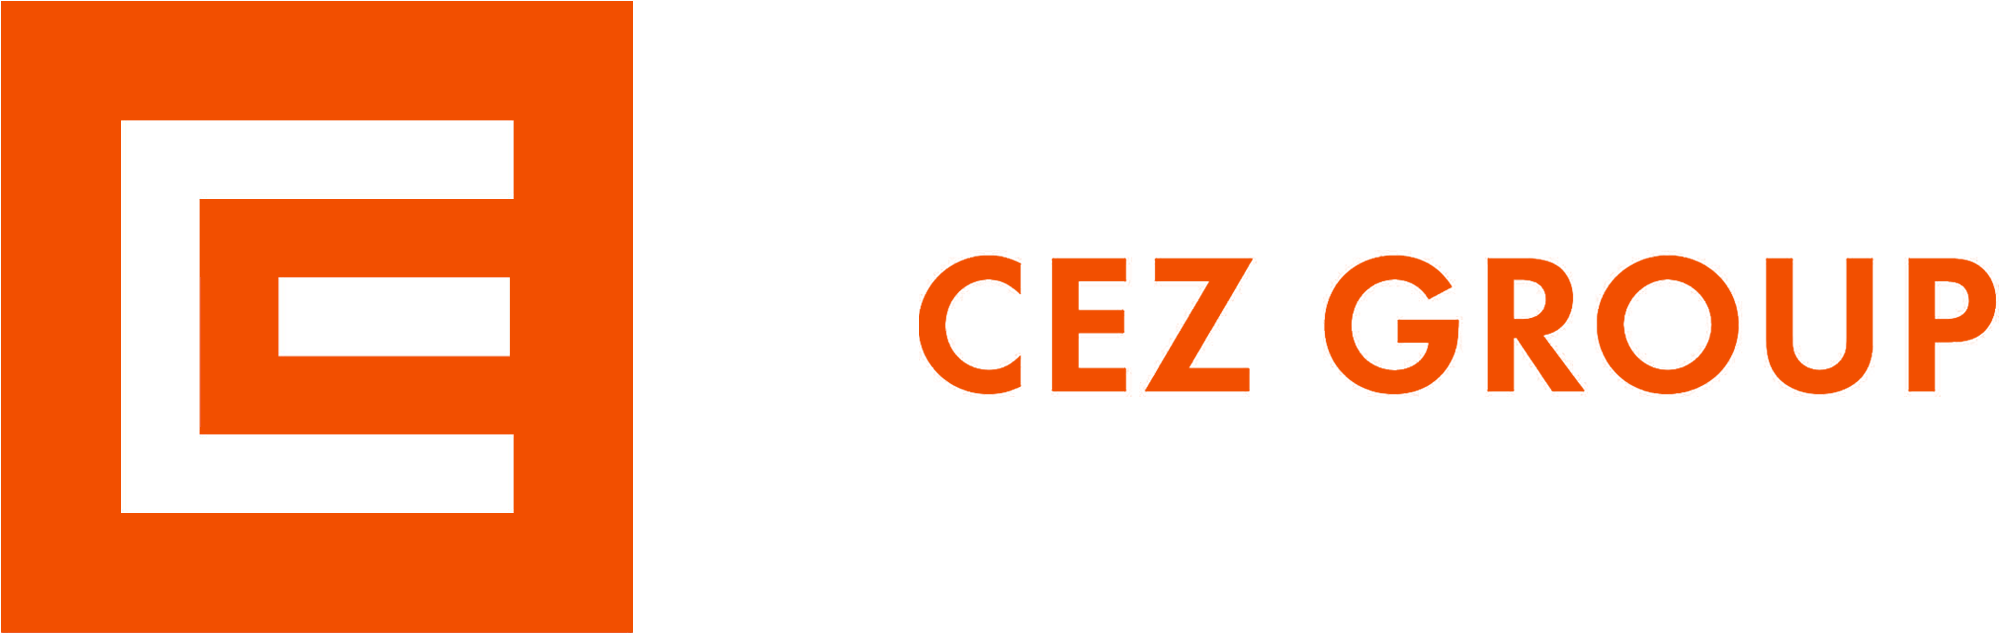 Cez Group Logo Logok - Čez Group (2272x1704), Png Download